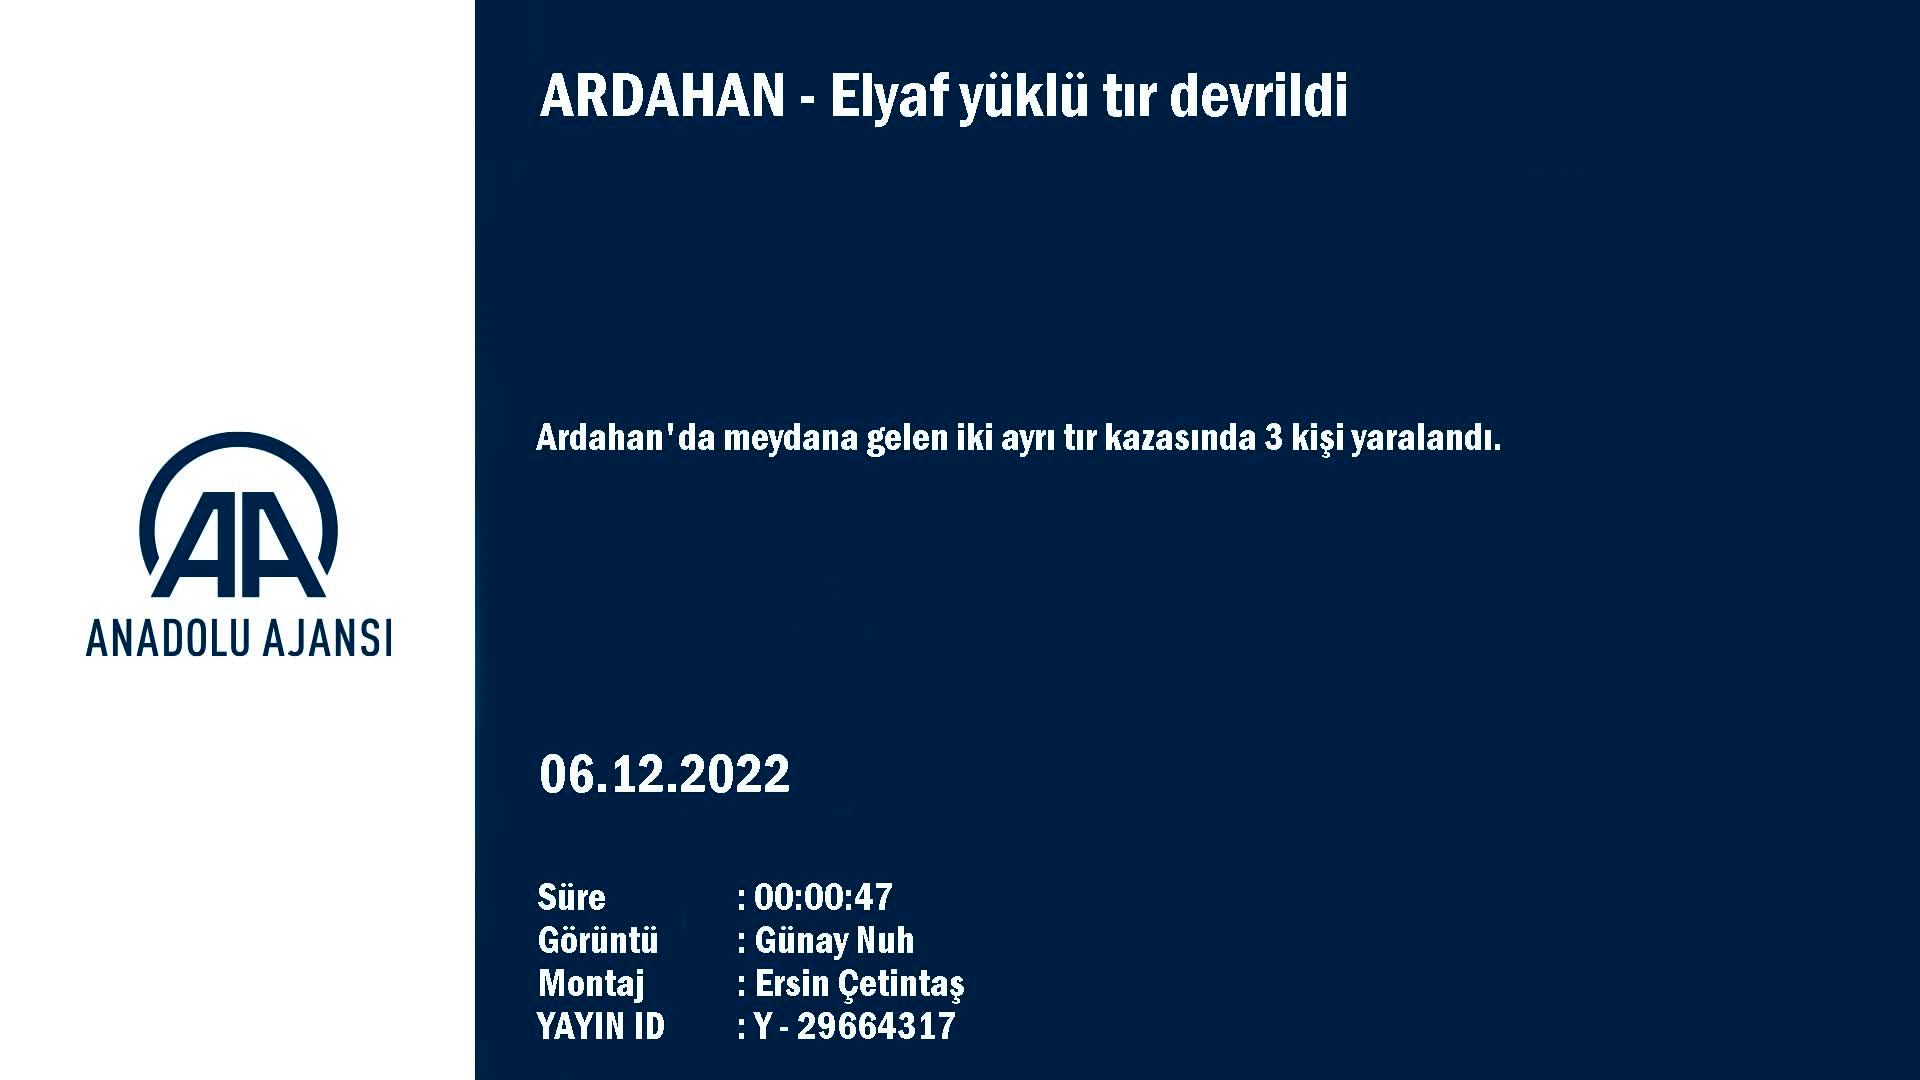 ARDAHAN (AA) – Ardahan'da